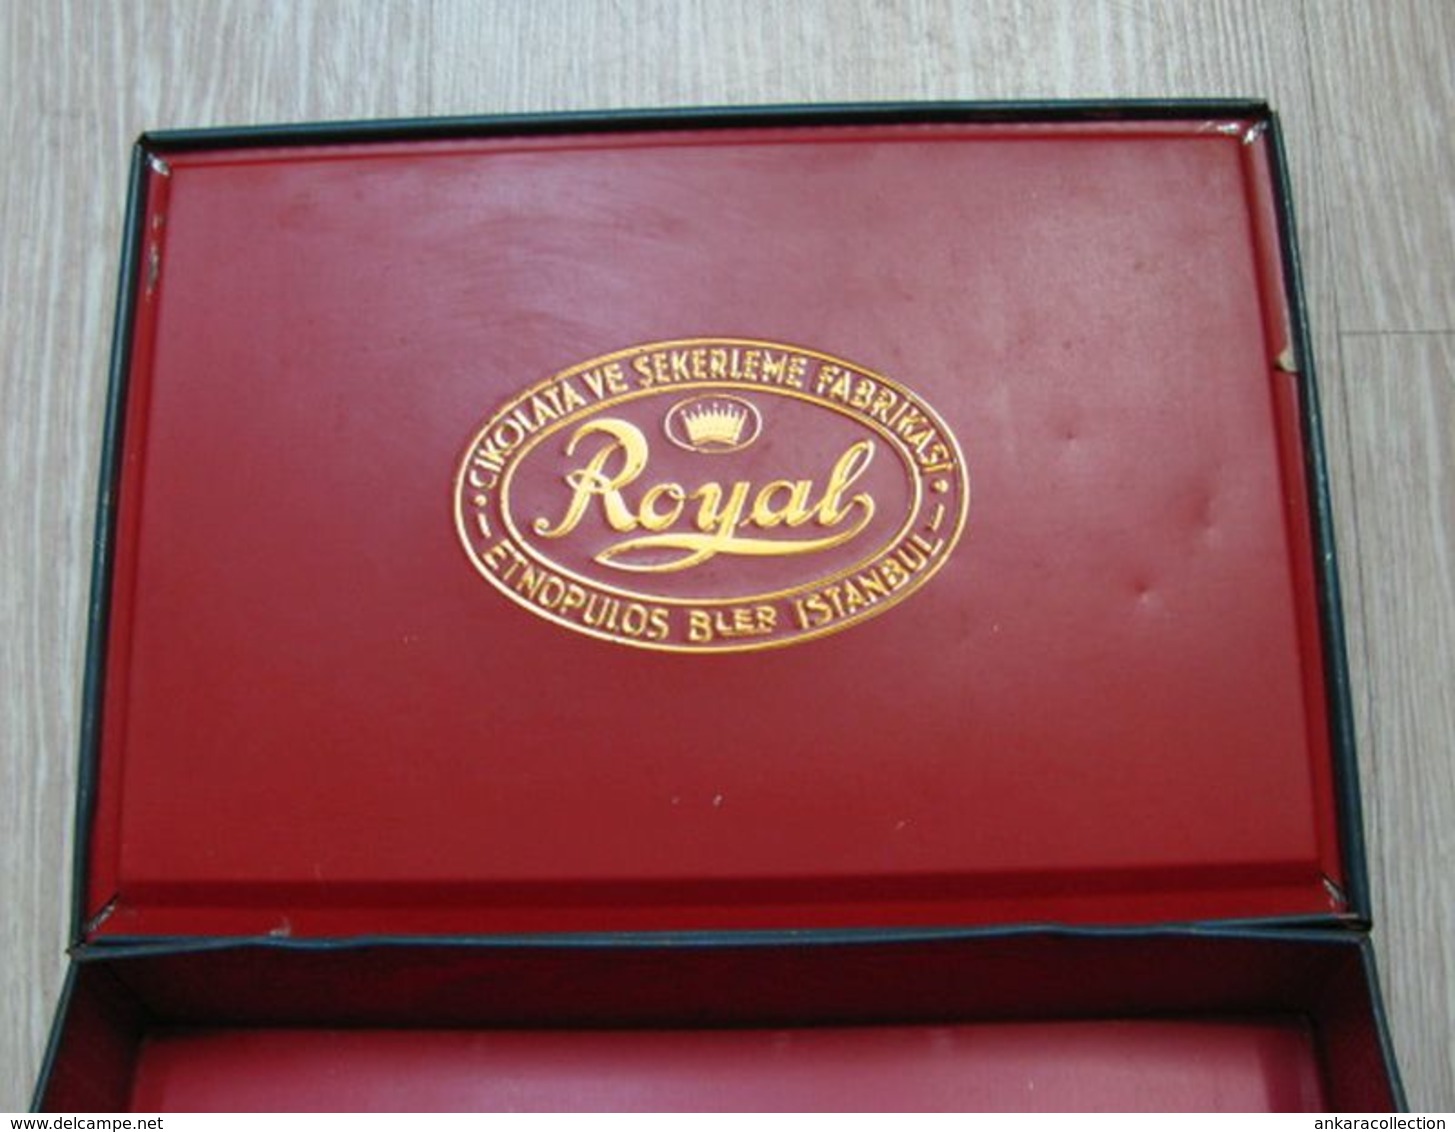 AC - ROYAL CHOCOLATE & CONFECTIONERY ETNOPULOS BLER ISTANBUL TURKEY EMPTY VINTAGE TIN BOX - Boxes